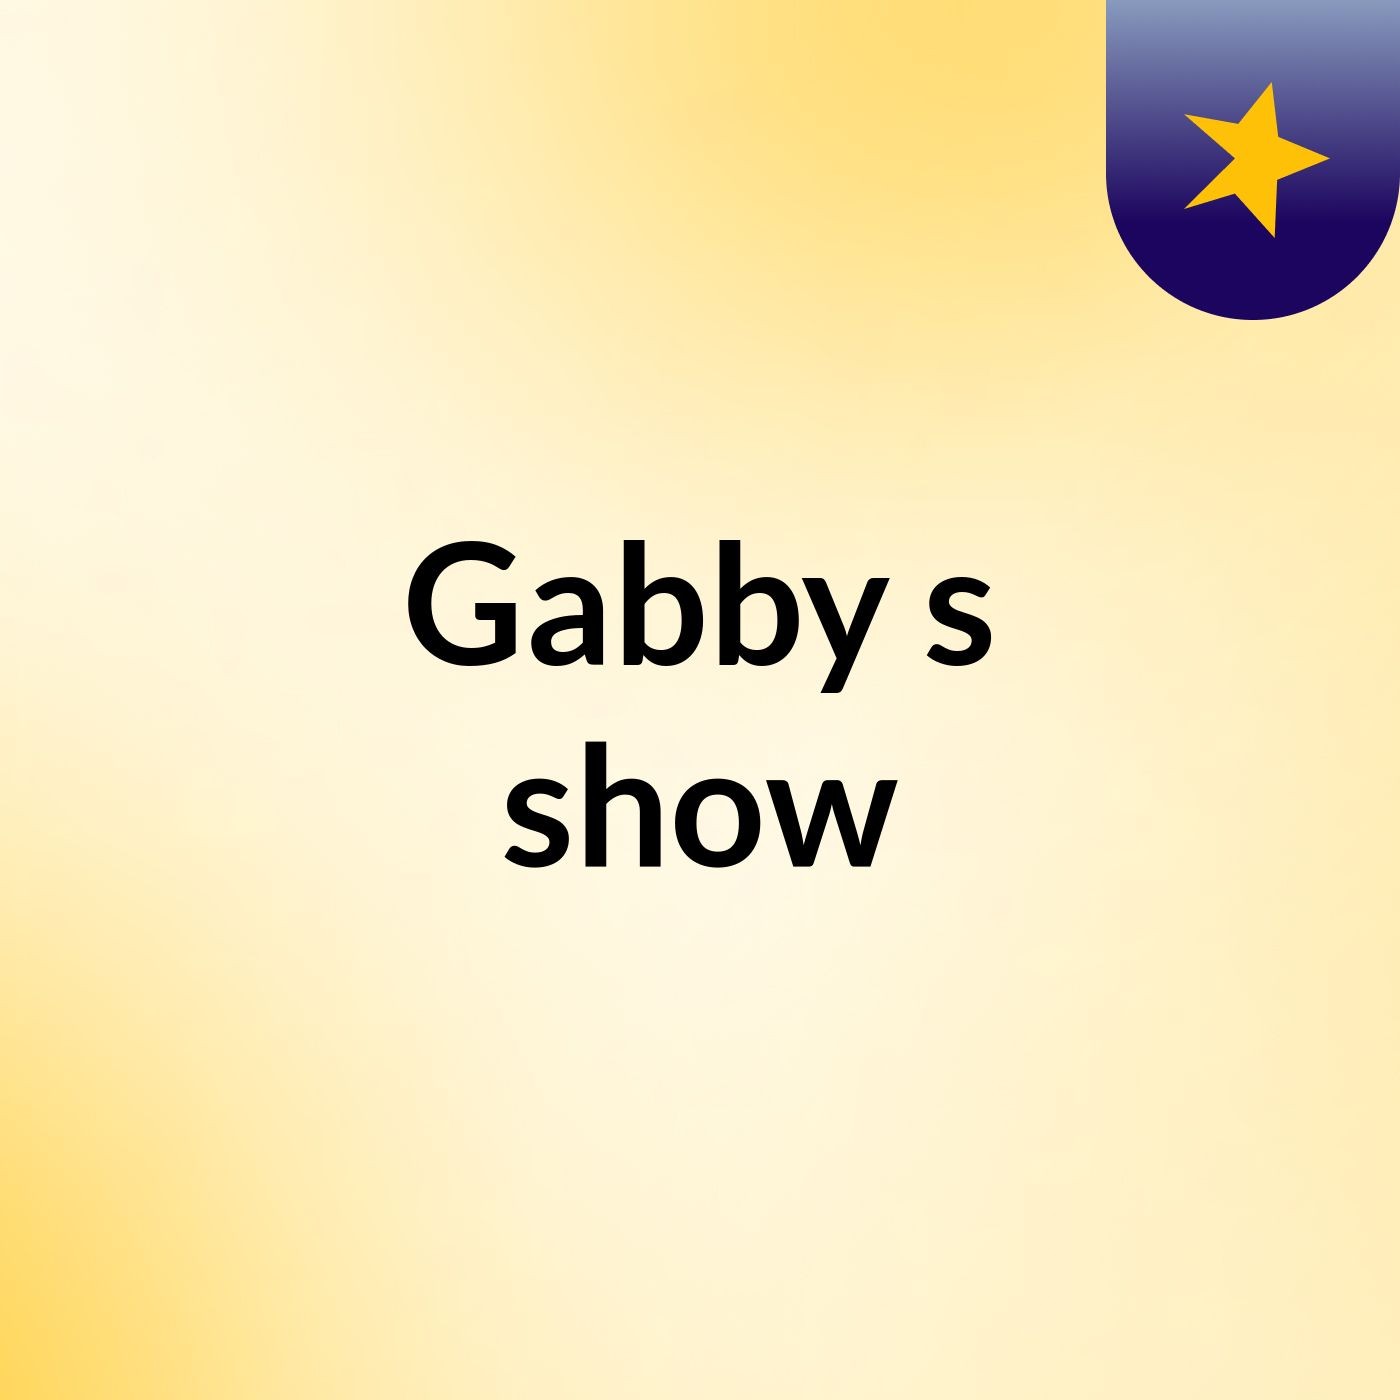 Gabby's show